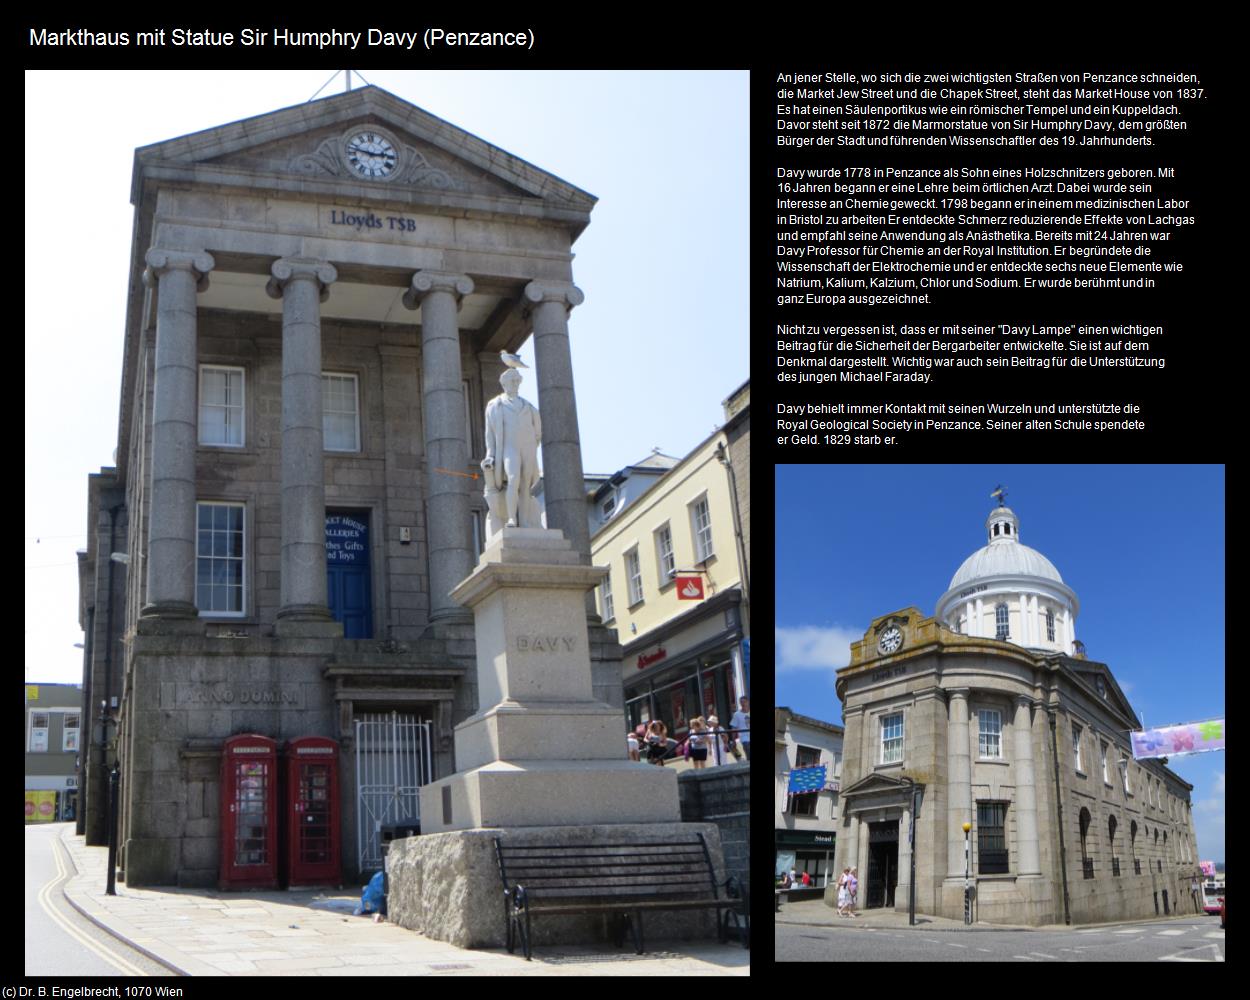 Markthaus mit Statue Sir Humphry Davy (Penzance, England) in Kulturatlas-ENGLAND und WALES